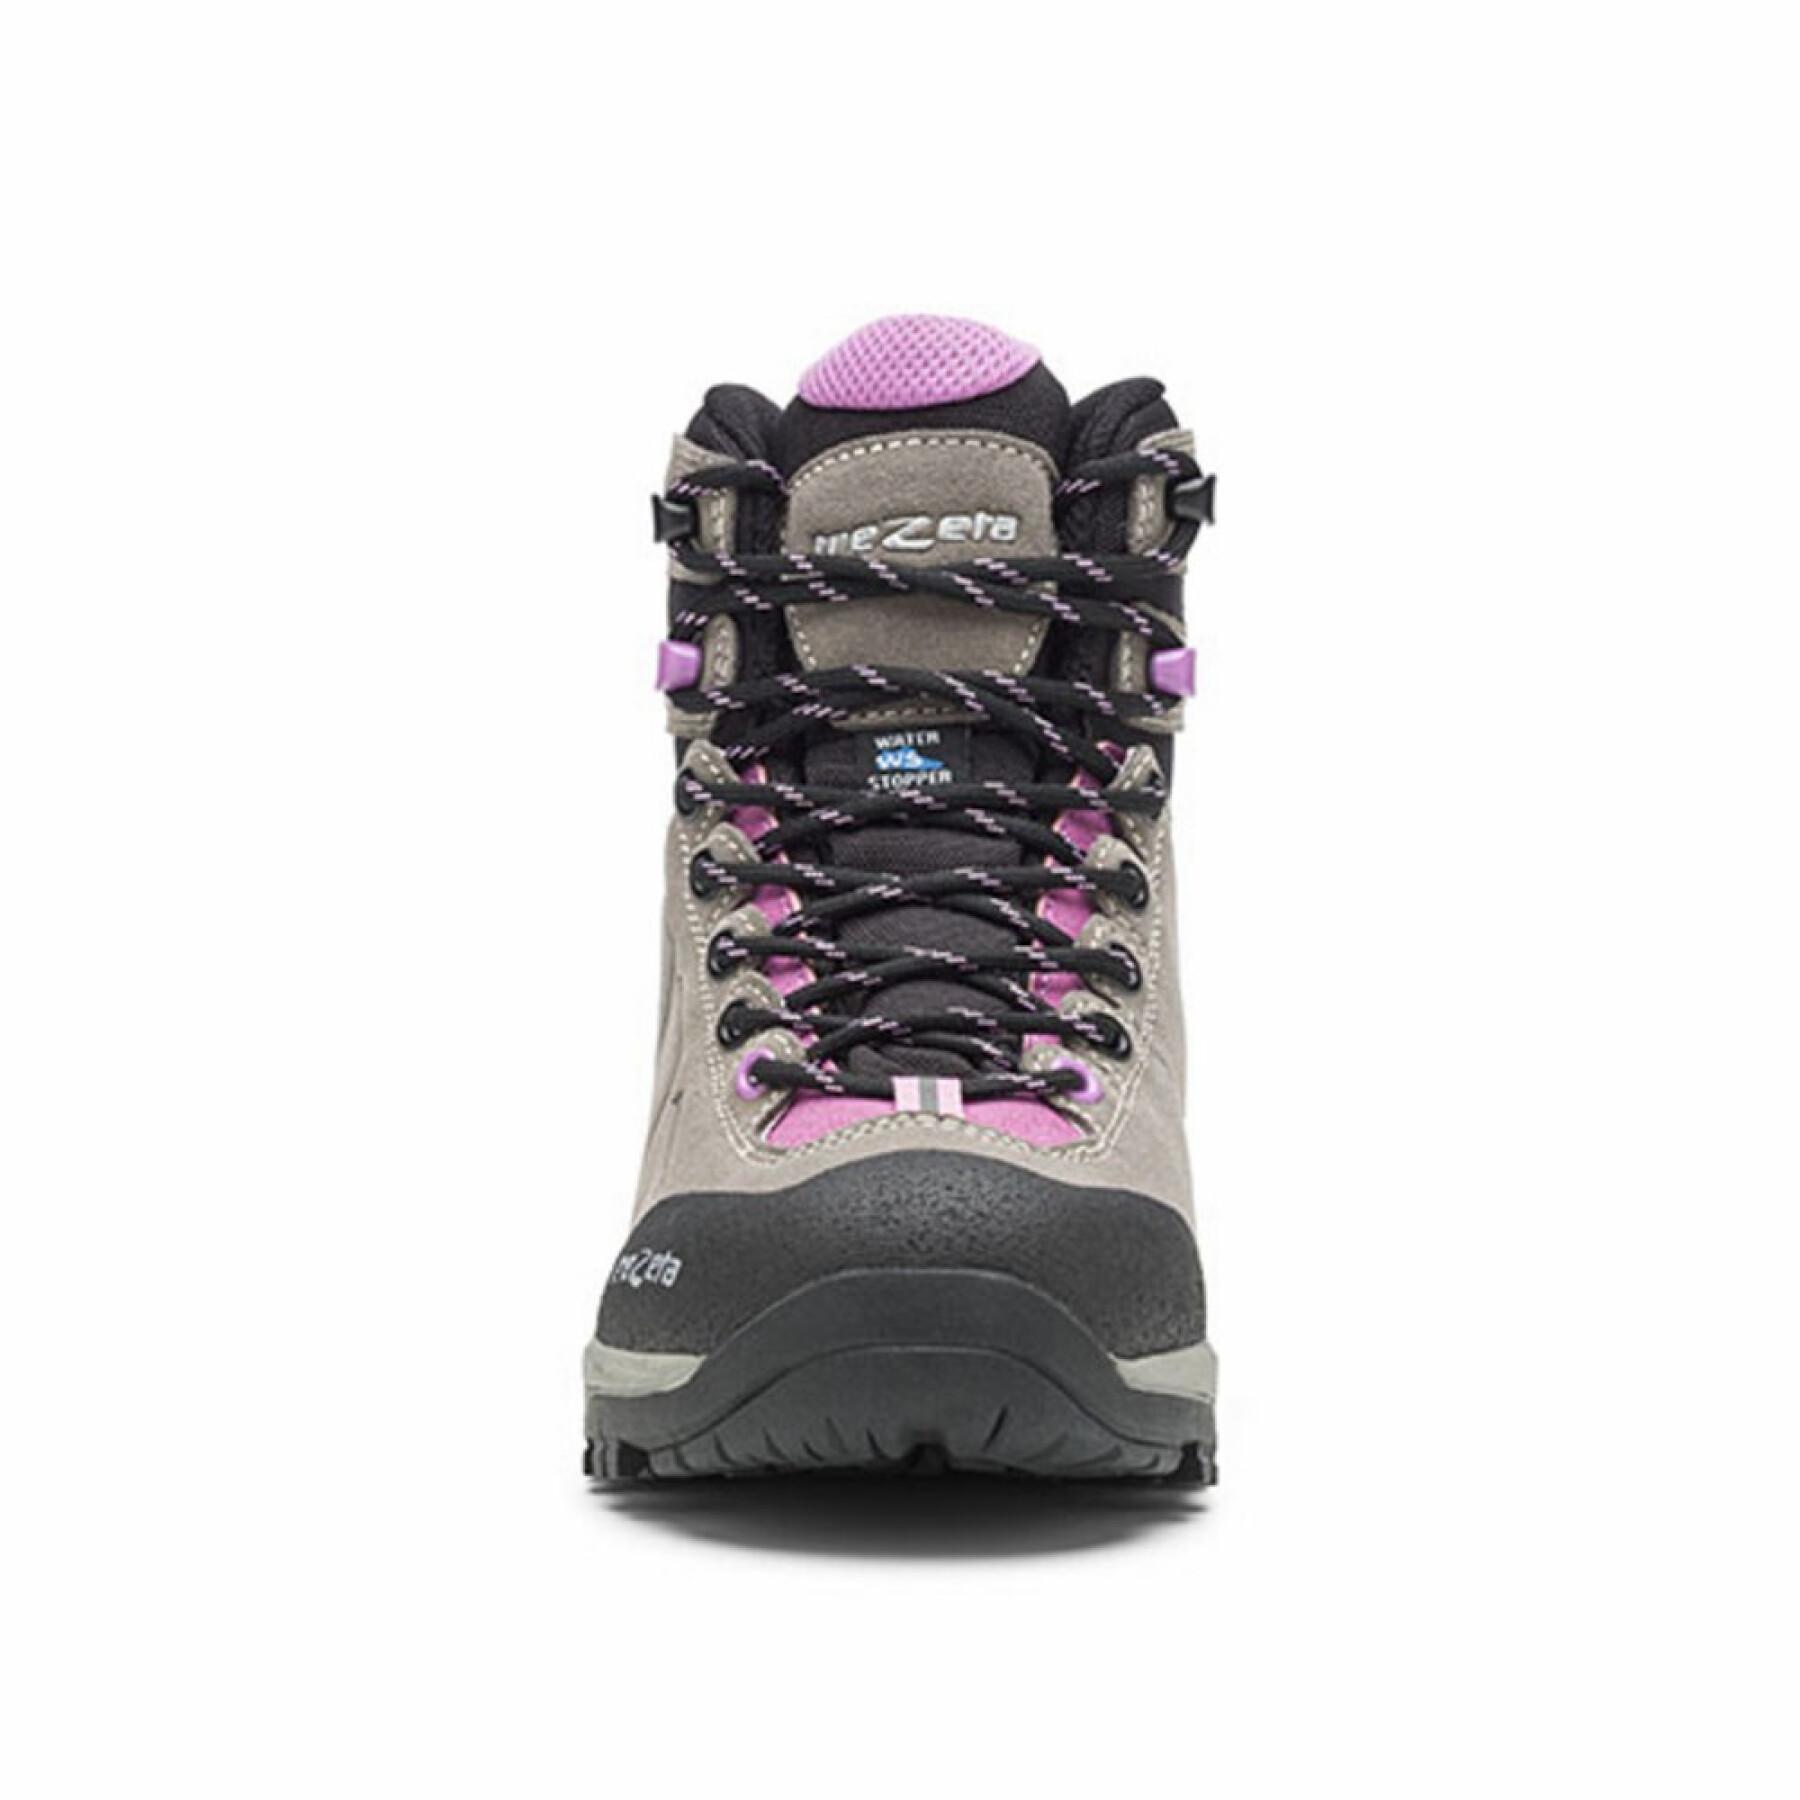 Women's hiking shoes Trezeta Drift WP